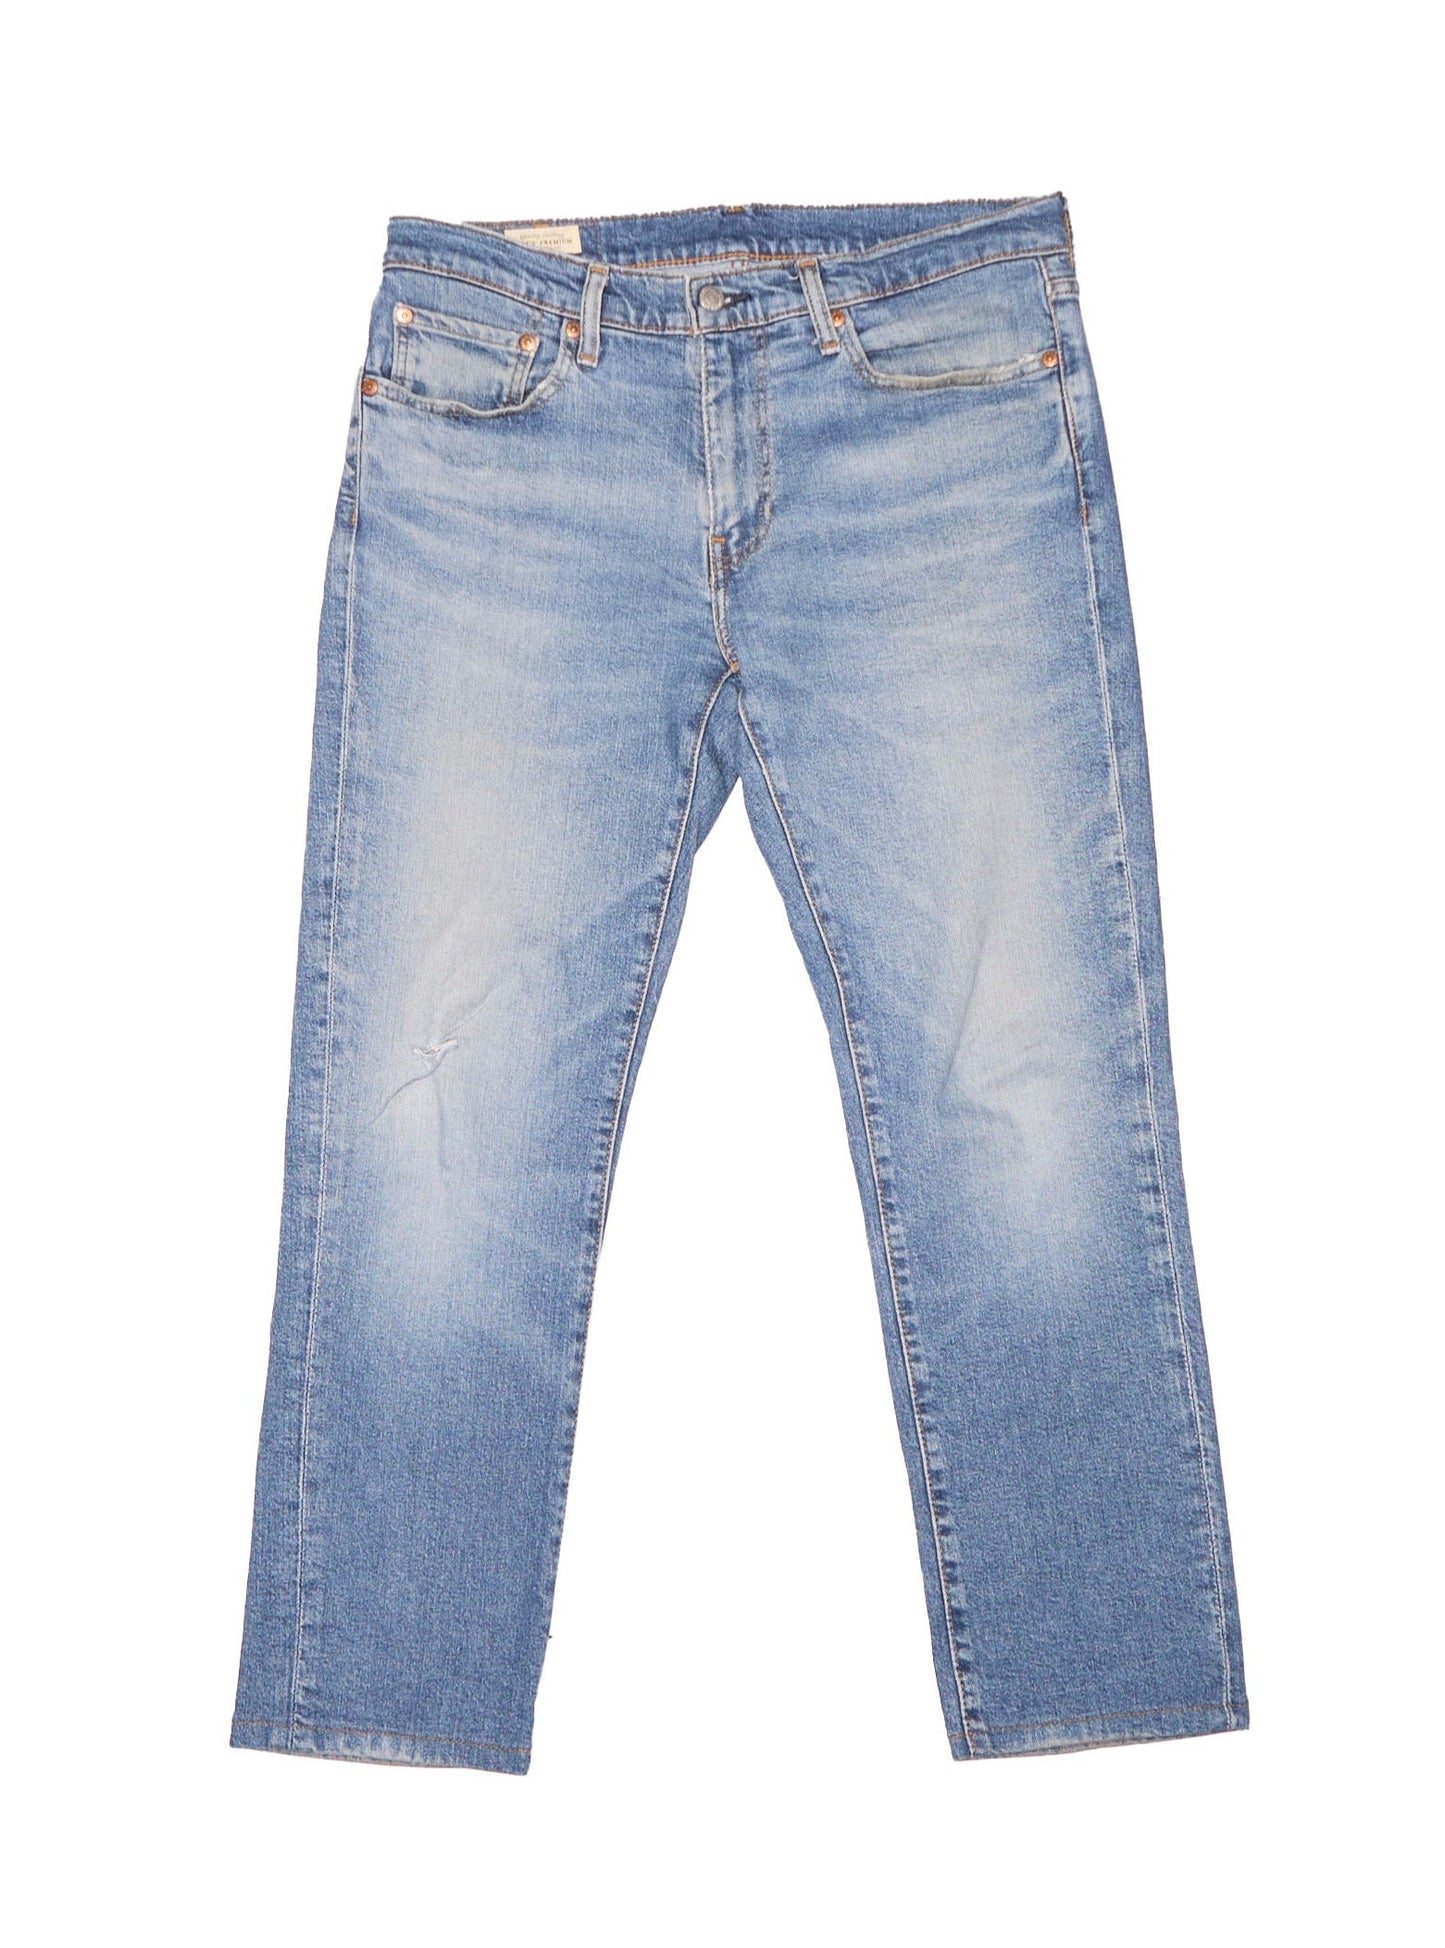 Zip Levis Straight Cut Jeans - W28" L31"